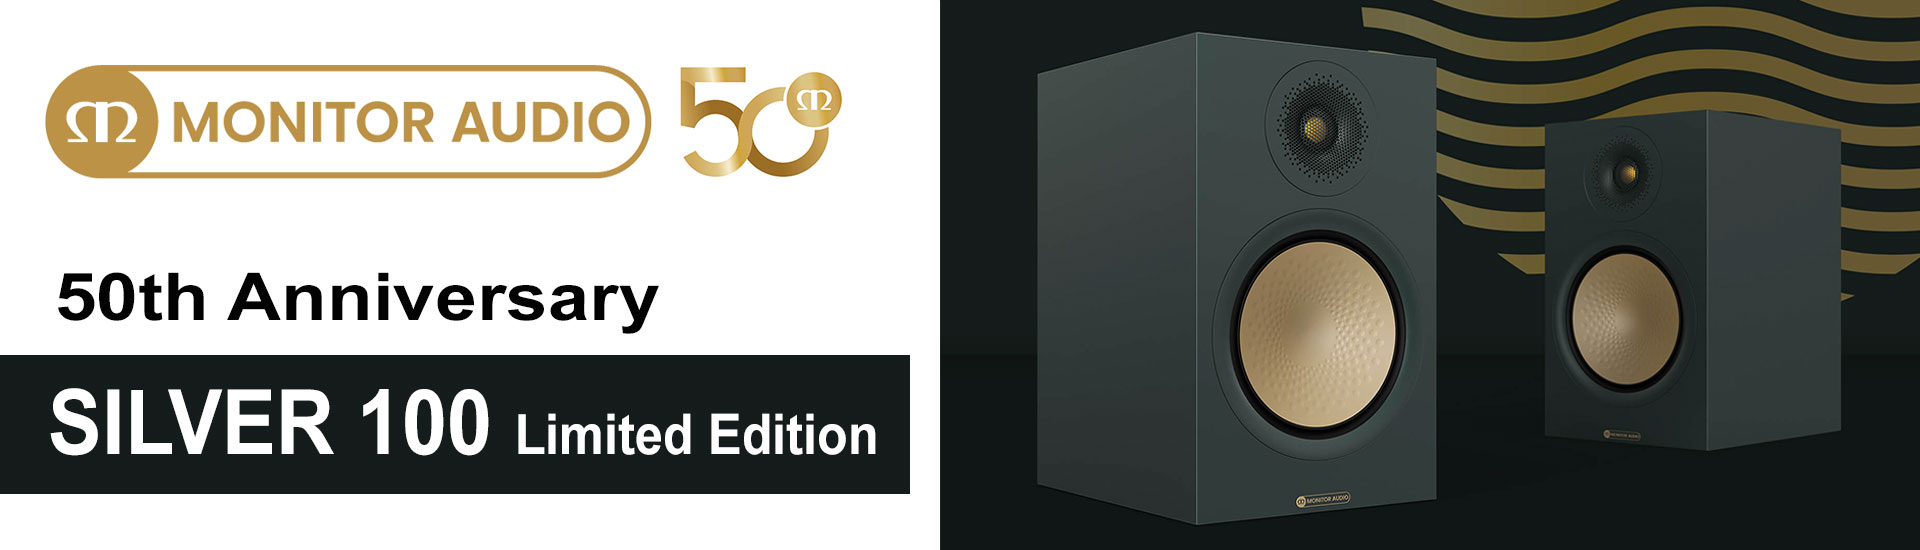 Monitor Audio 50th Anniversarya - Silver 100 Limited Edition